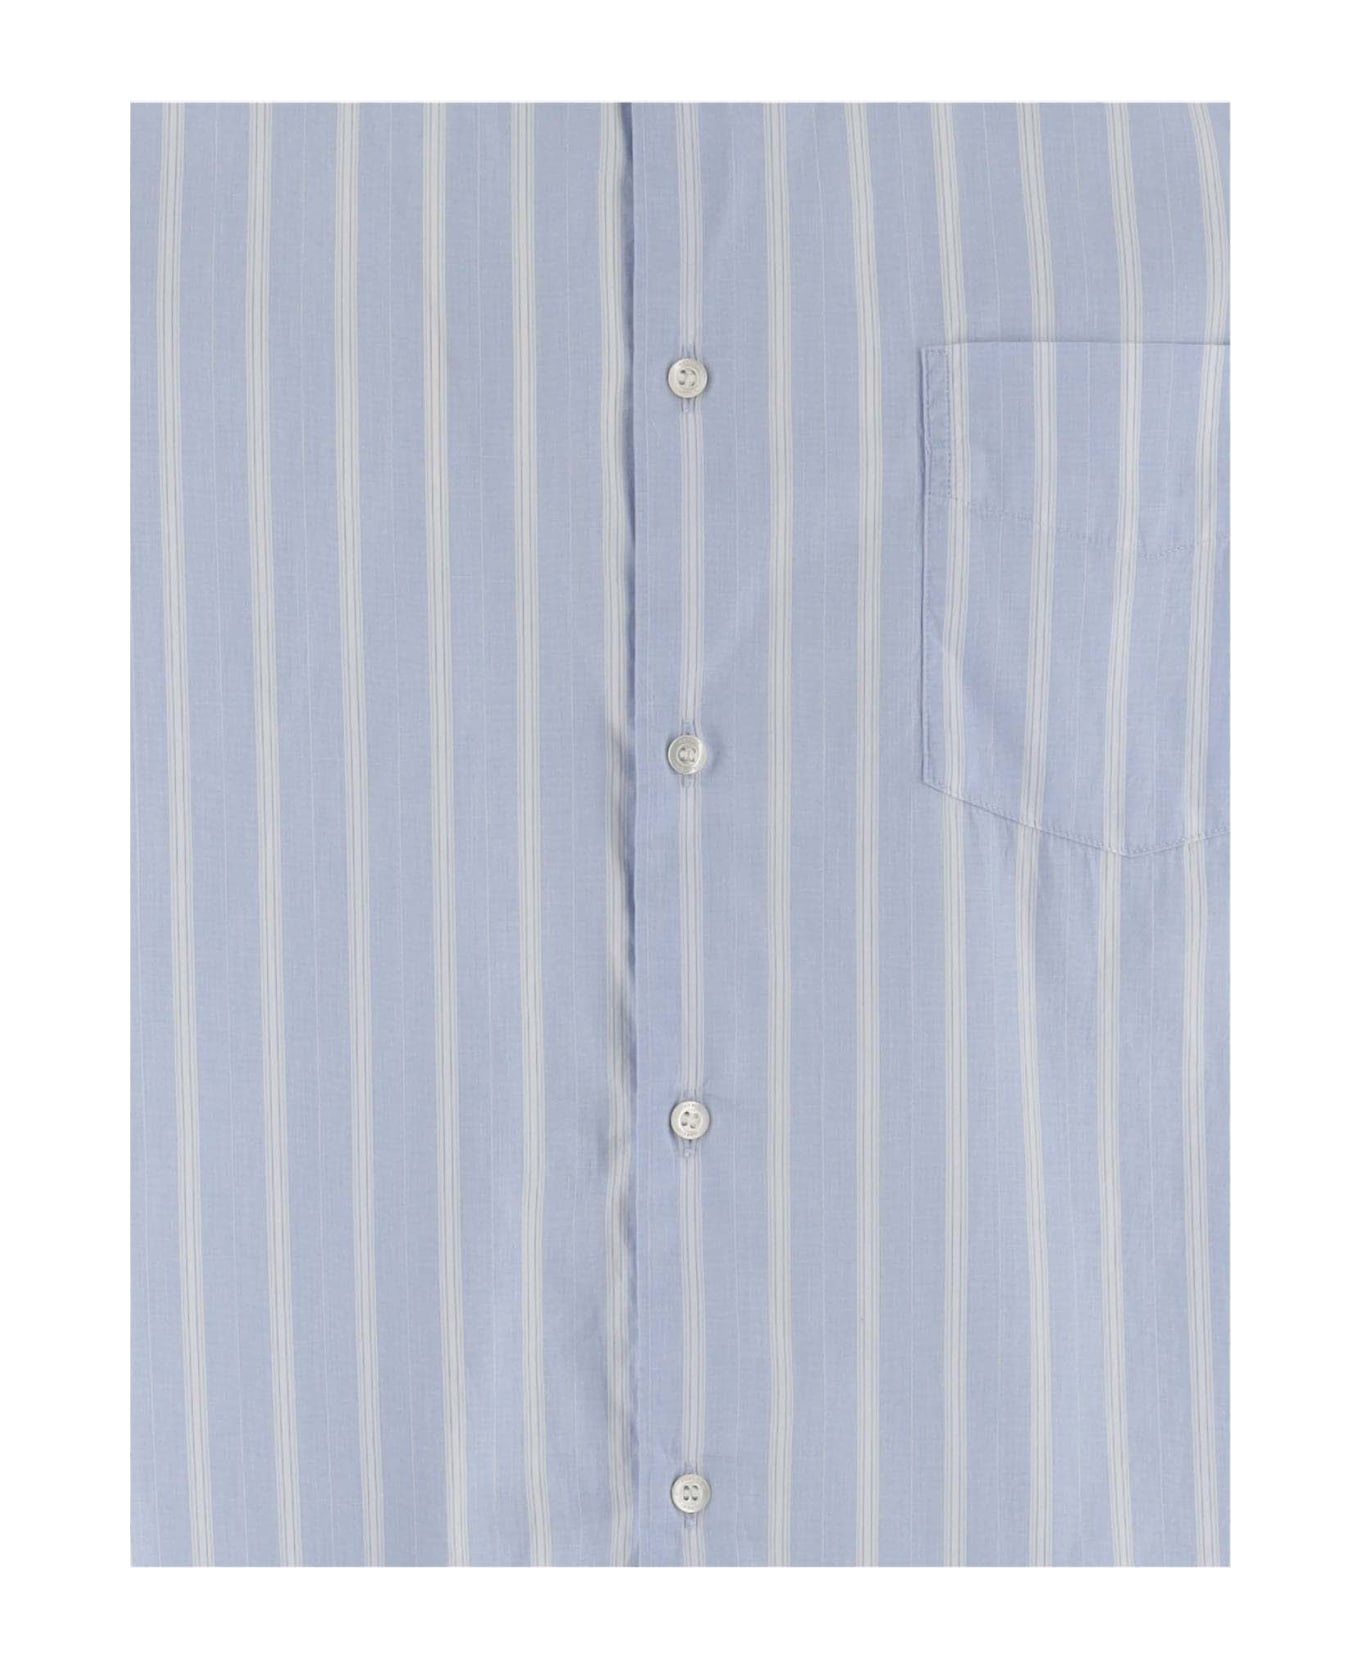 Aspesi Cotton Shirt With Striped Pattern - azzurra